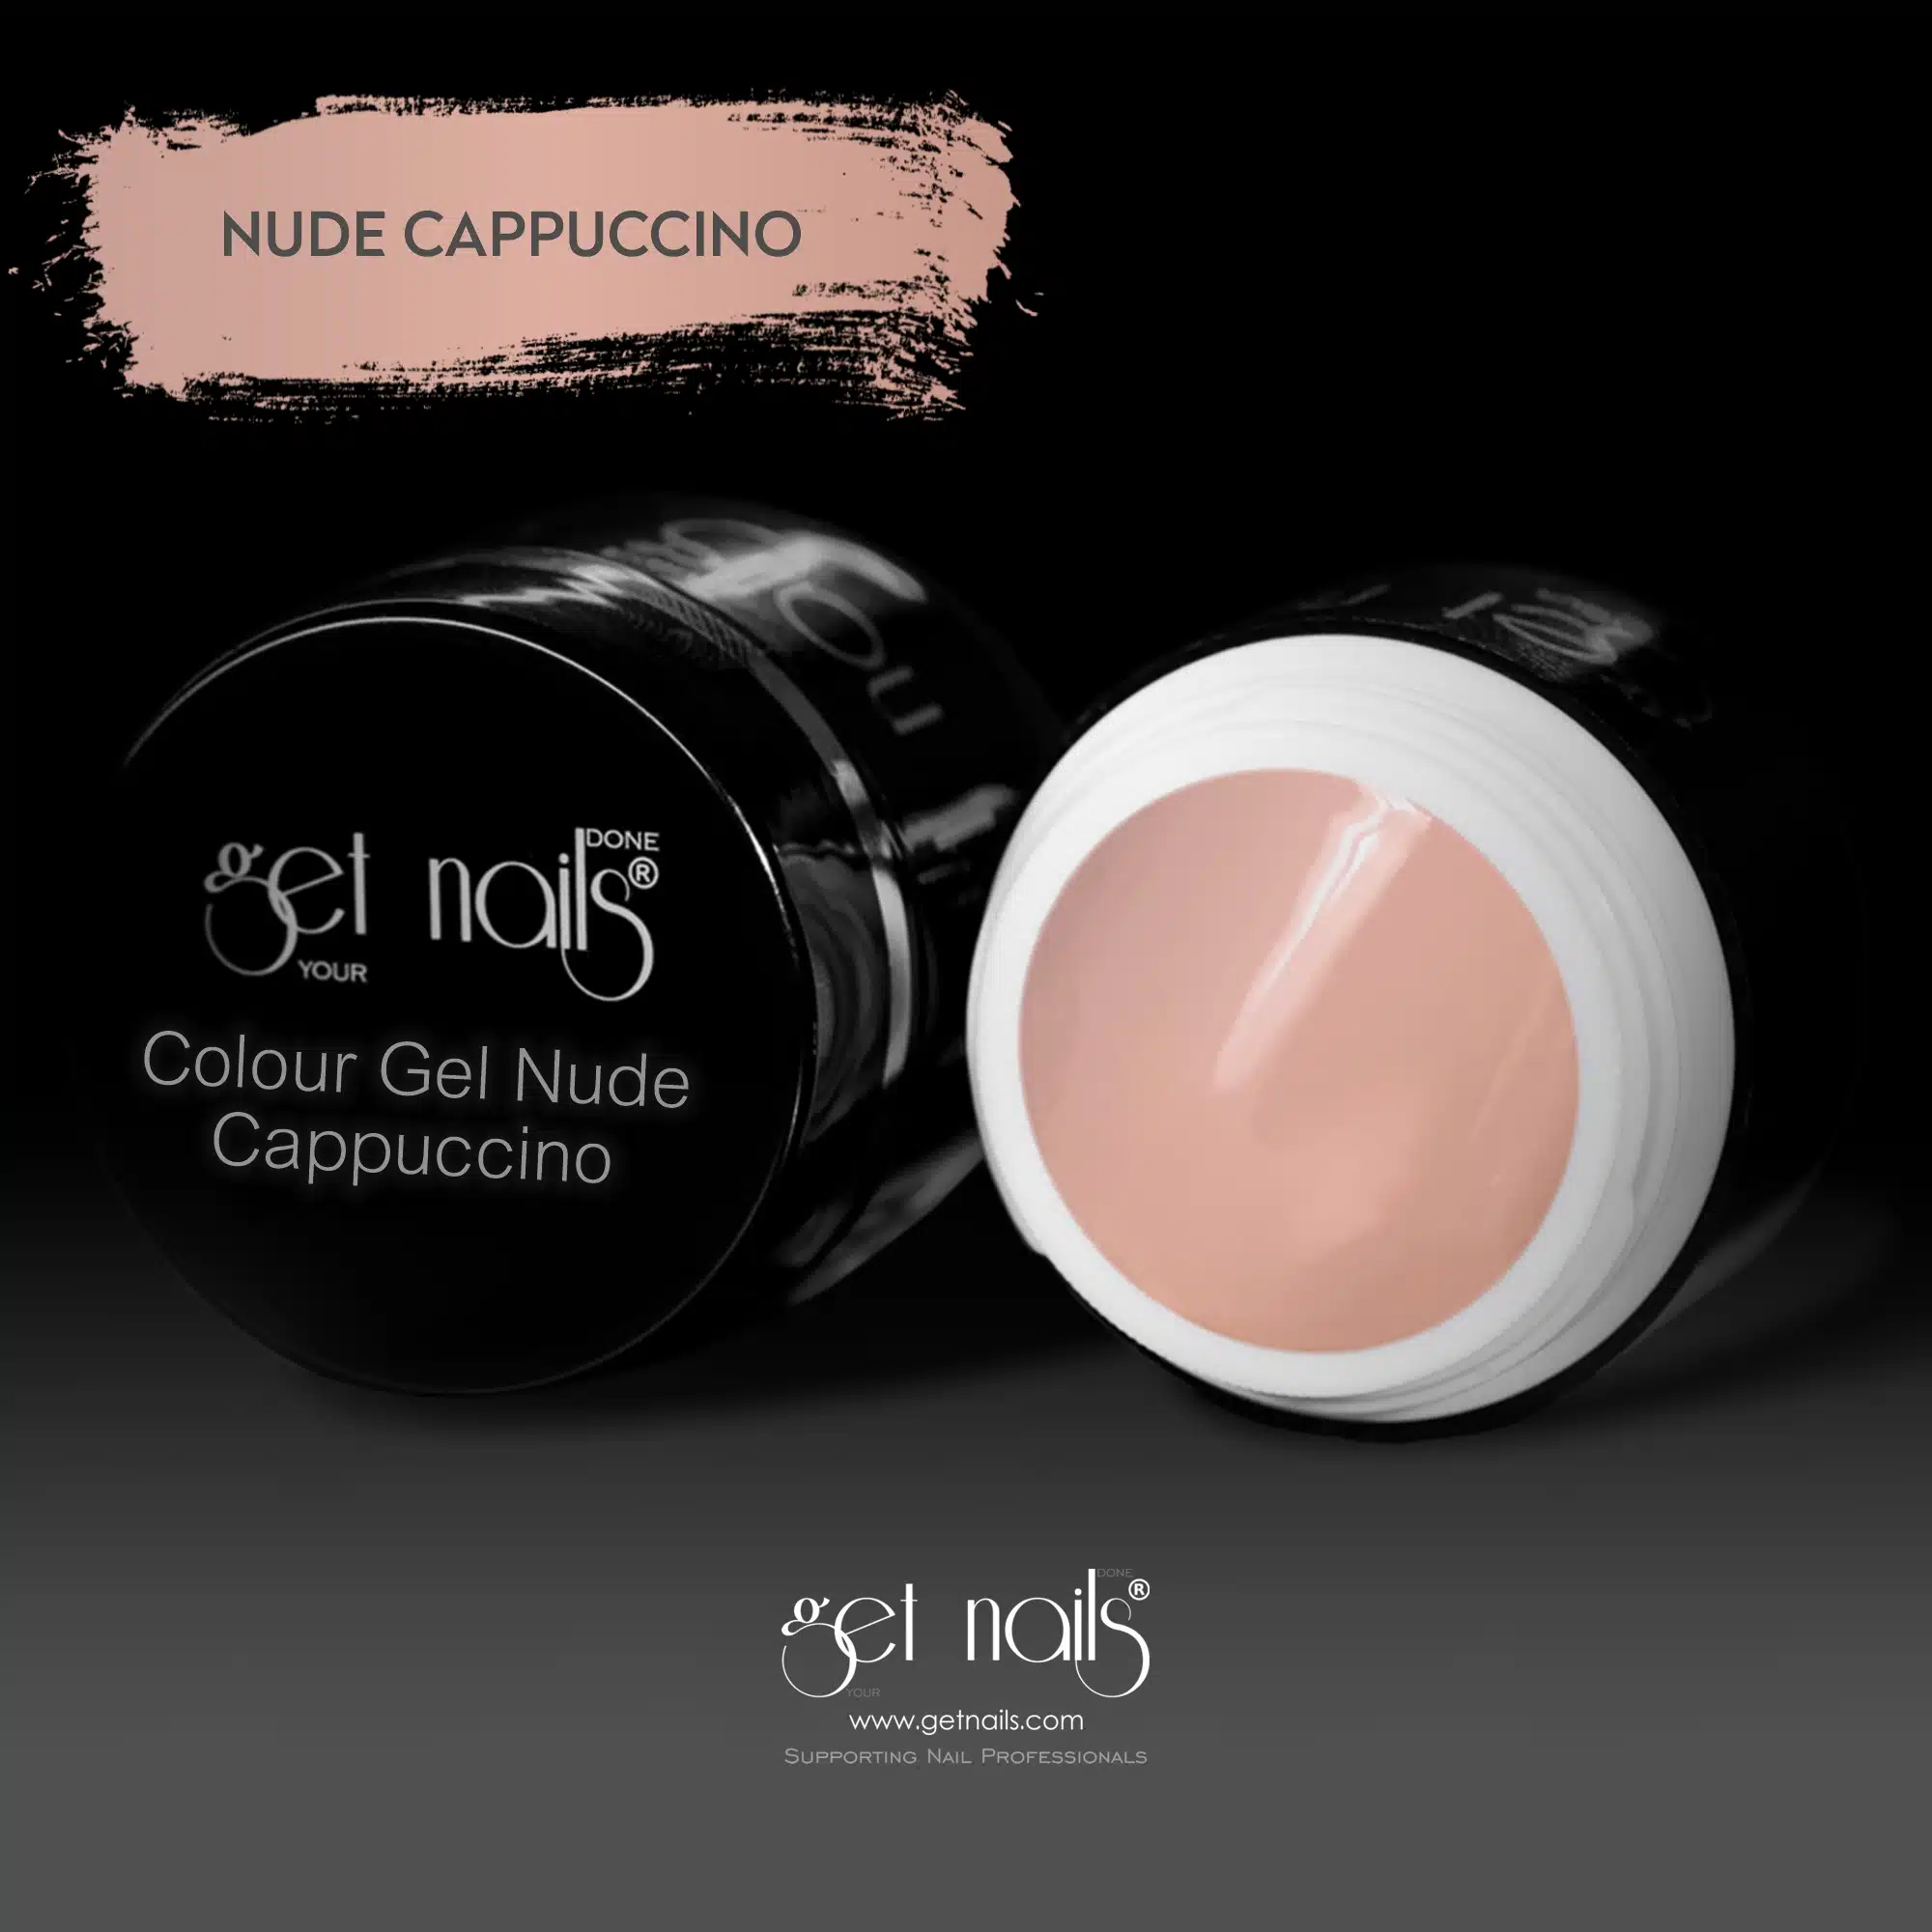 Get Nails Austria - Colour Gel Nude Cappuccino 5g